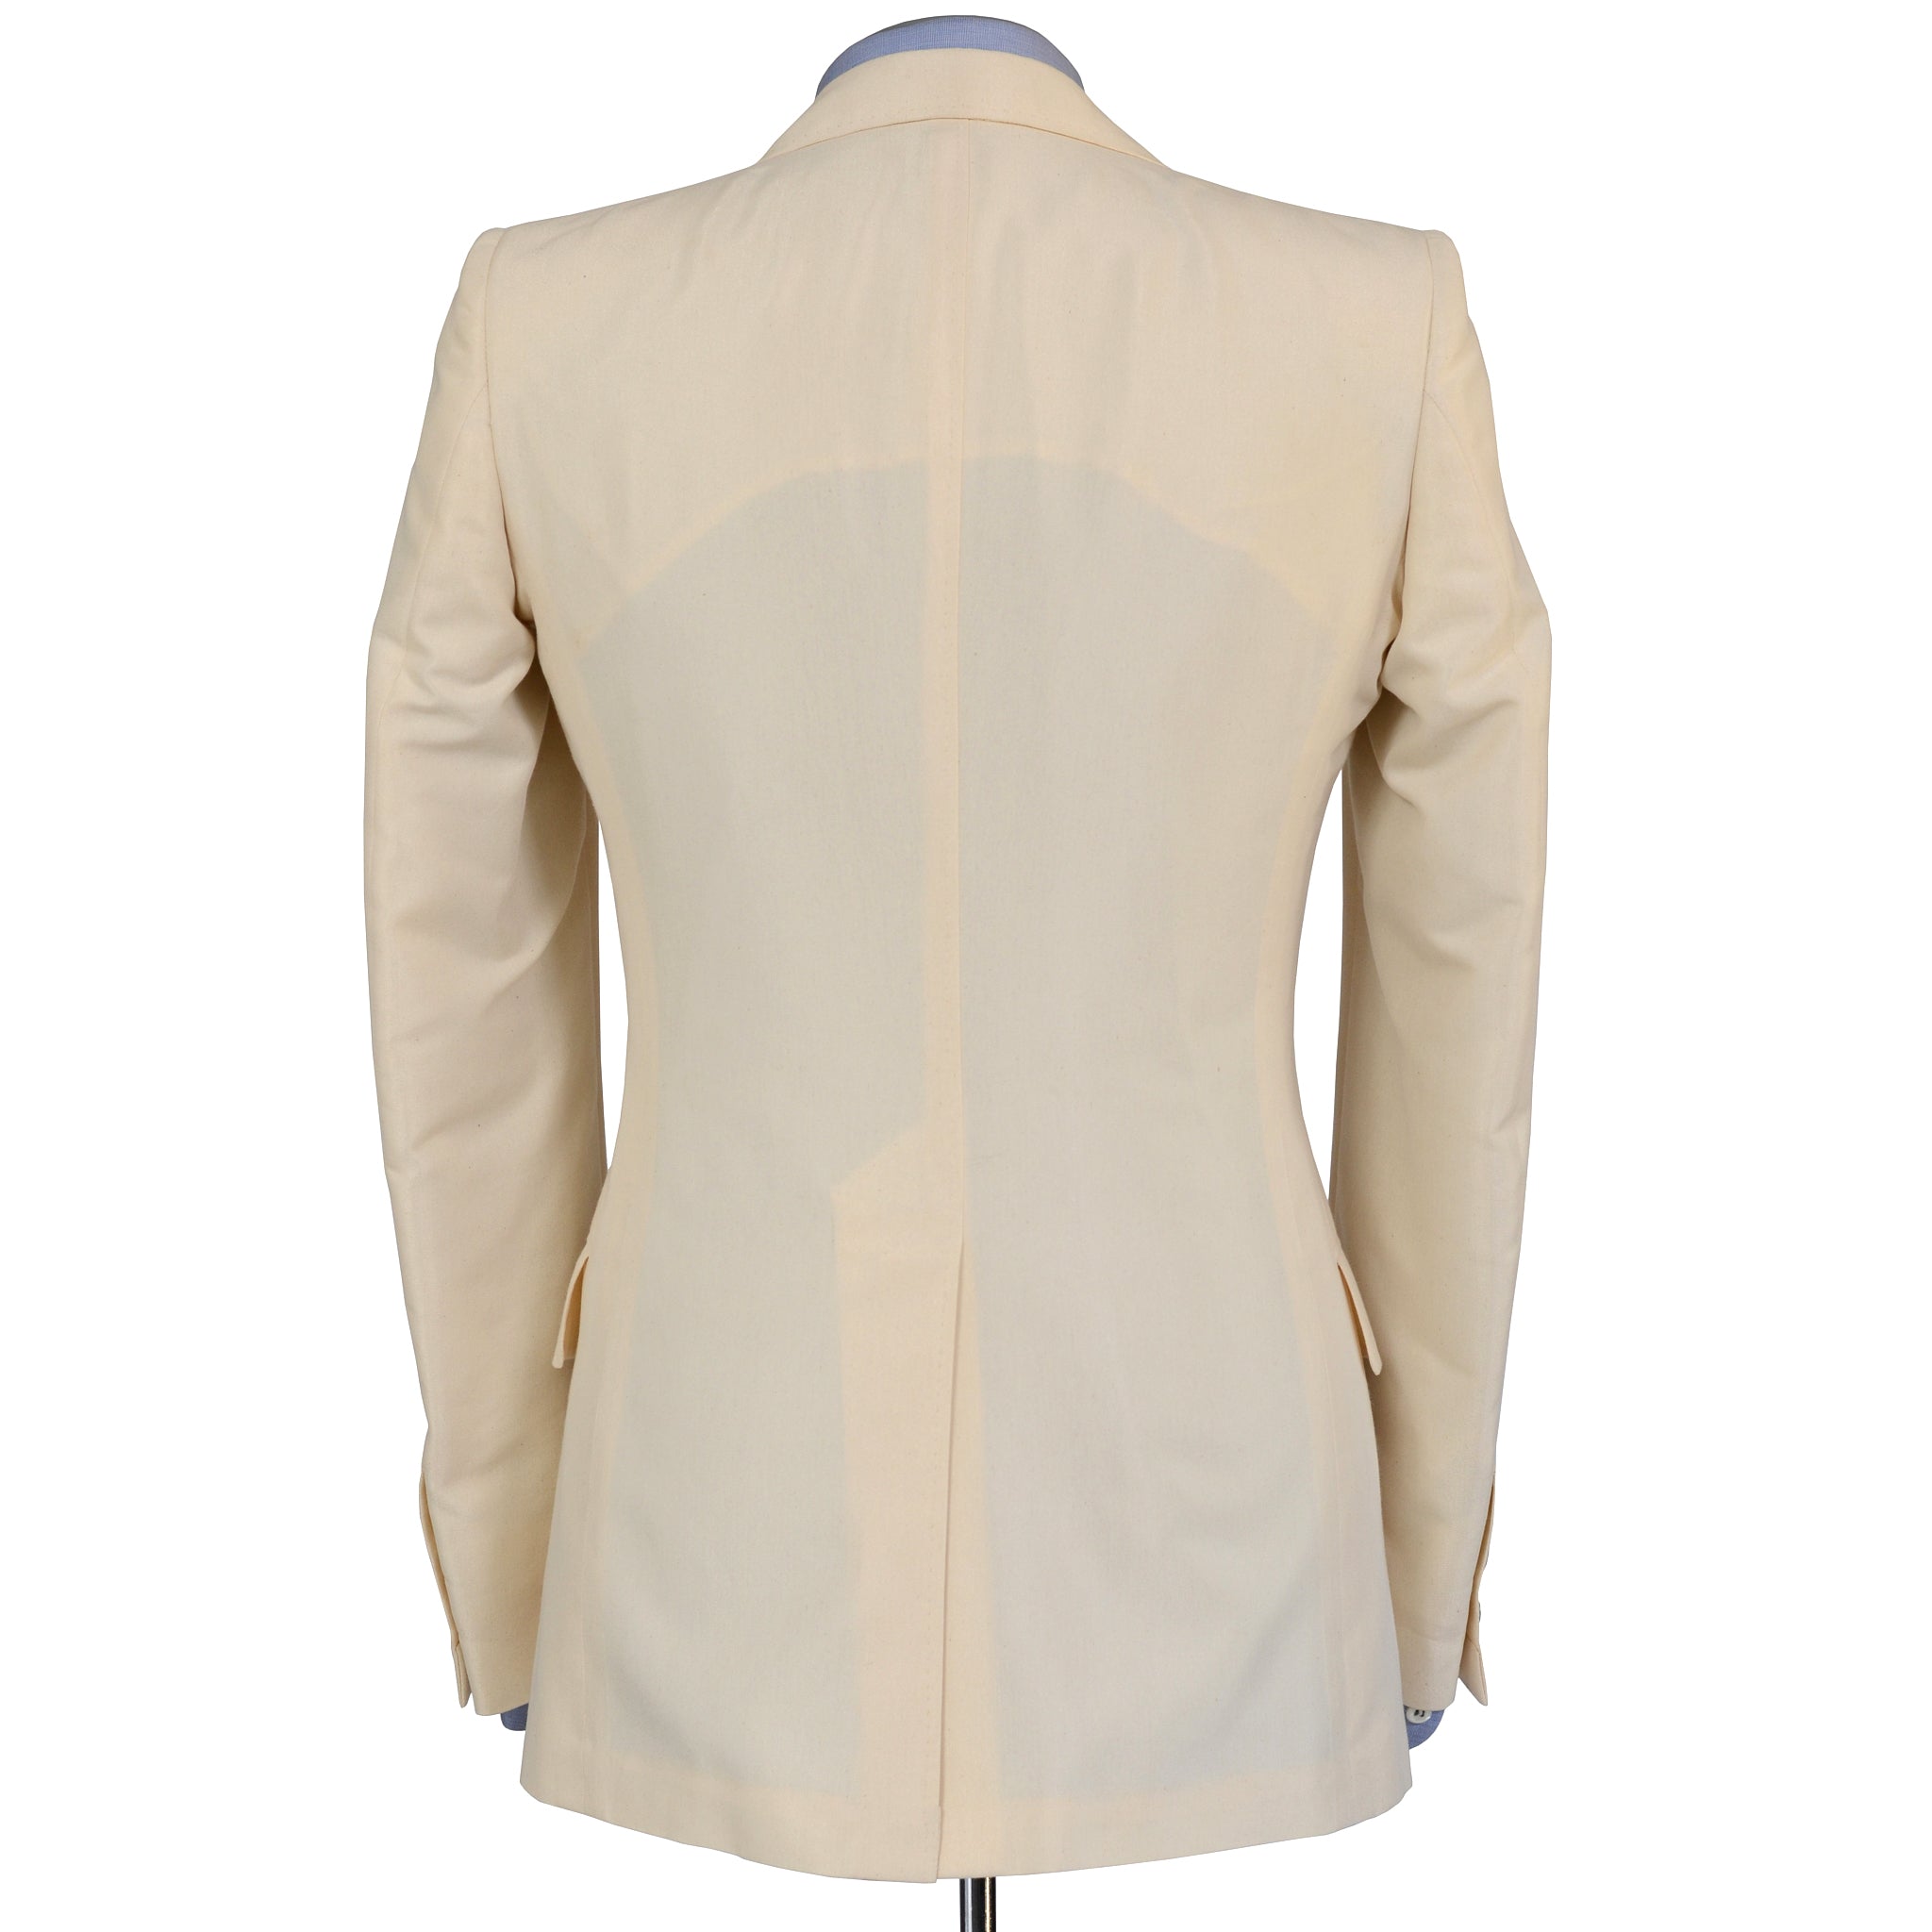 D'AVENZA Roma Handmade Cream Cotton Blend Blazer Jacket EU 44 NEW US 34